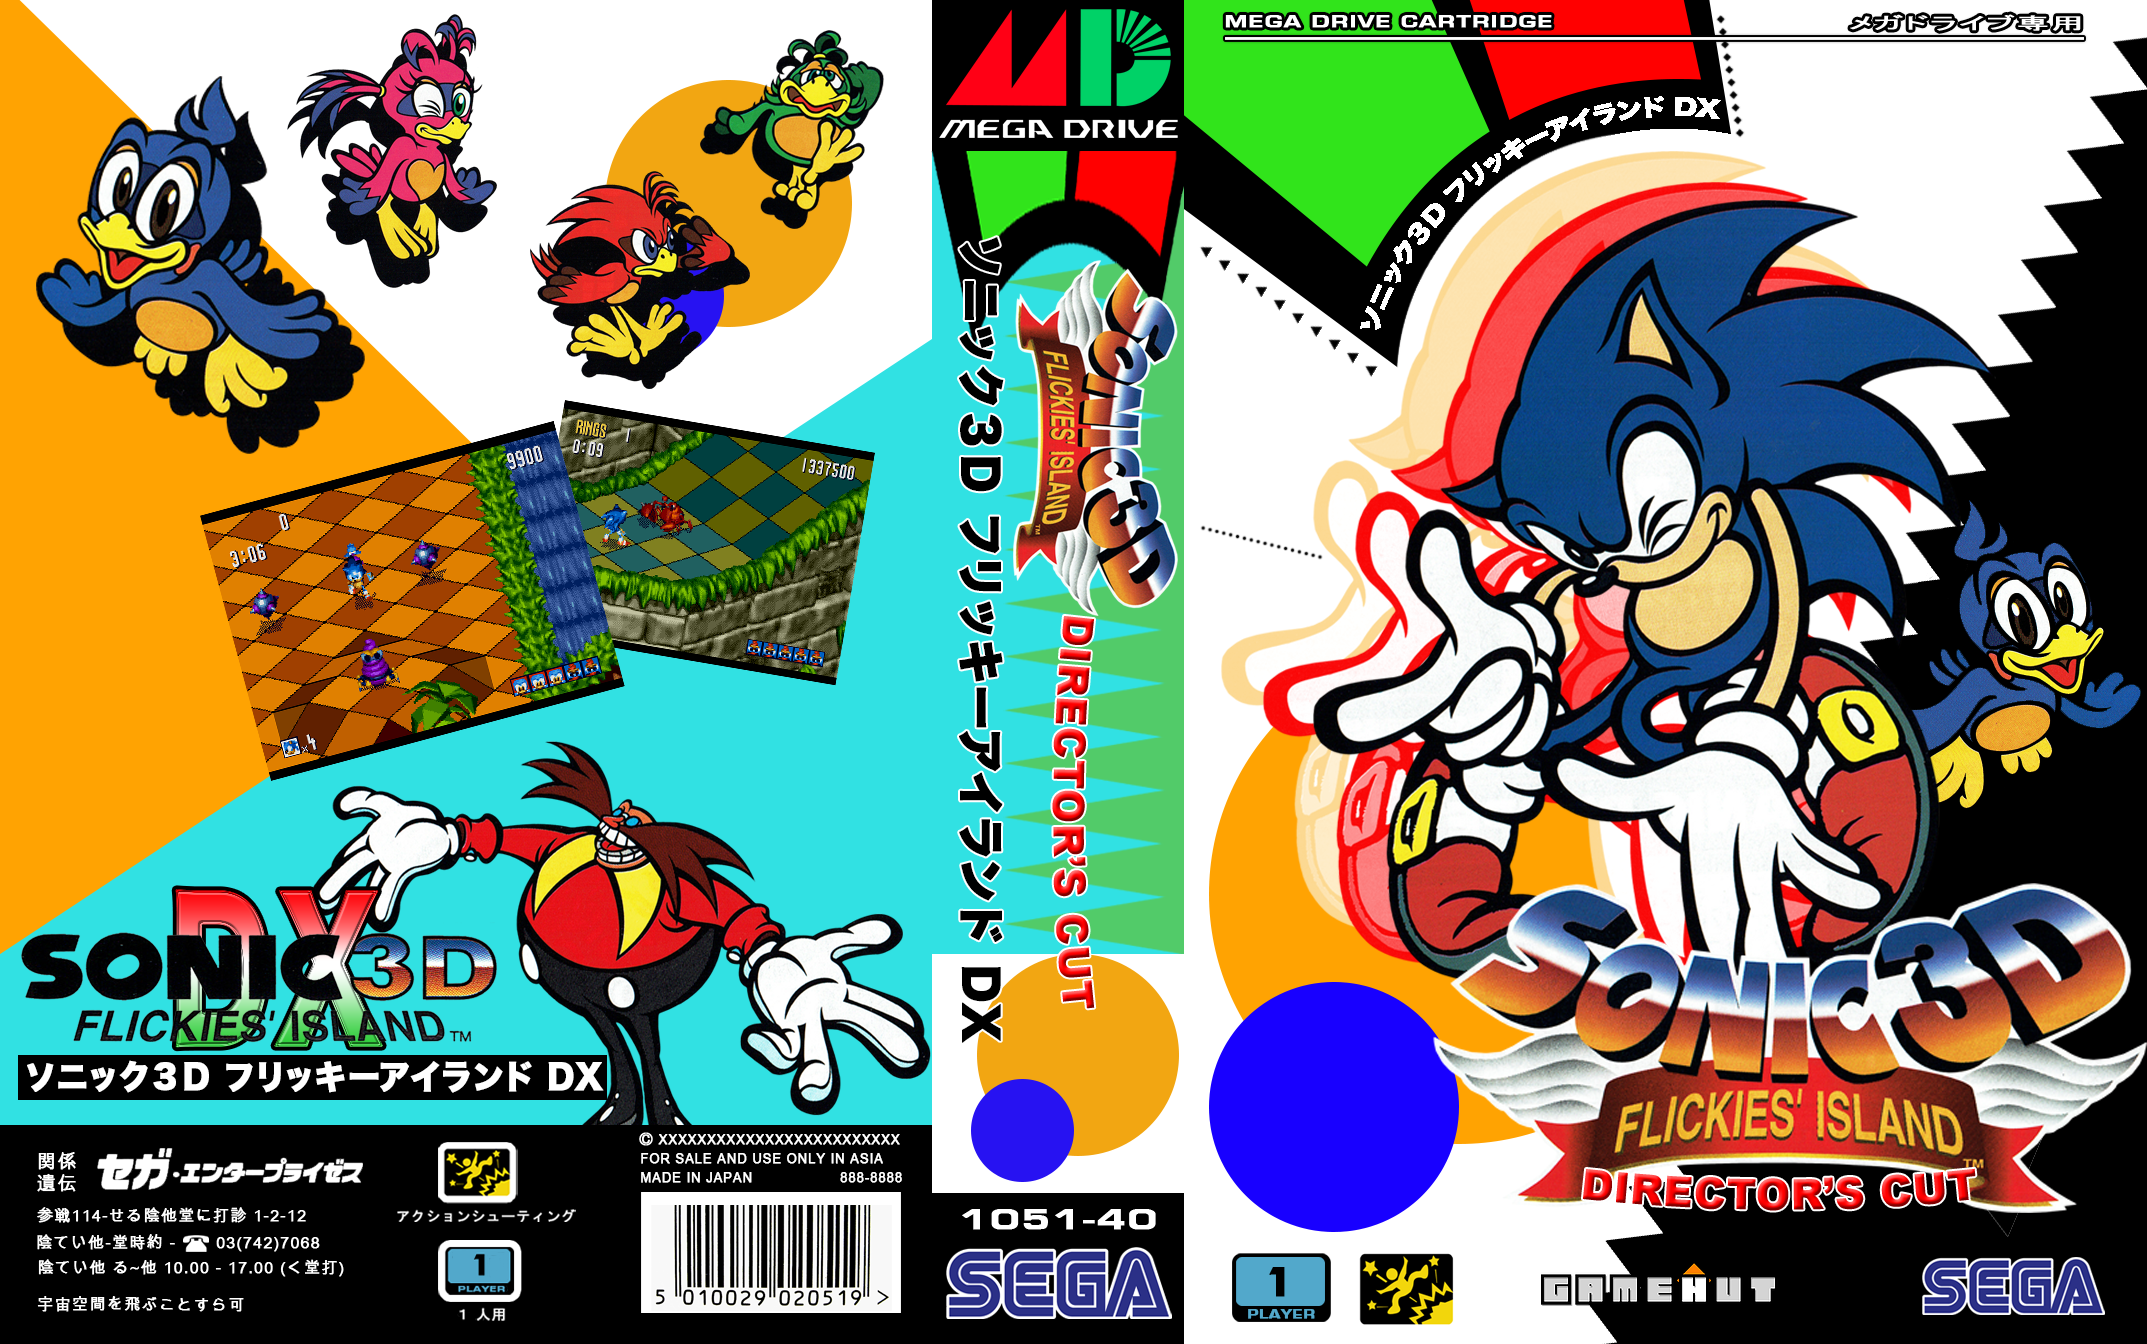 Sonic 3D Flickies' island Director's Cut JP box cover